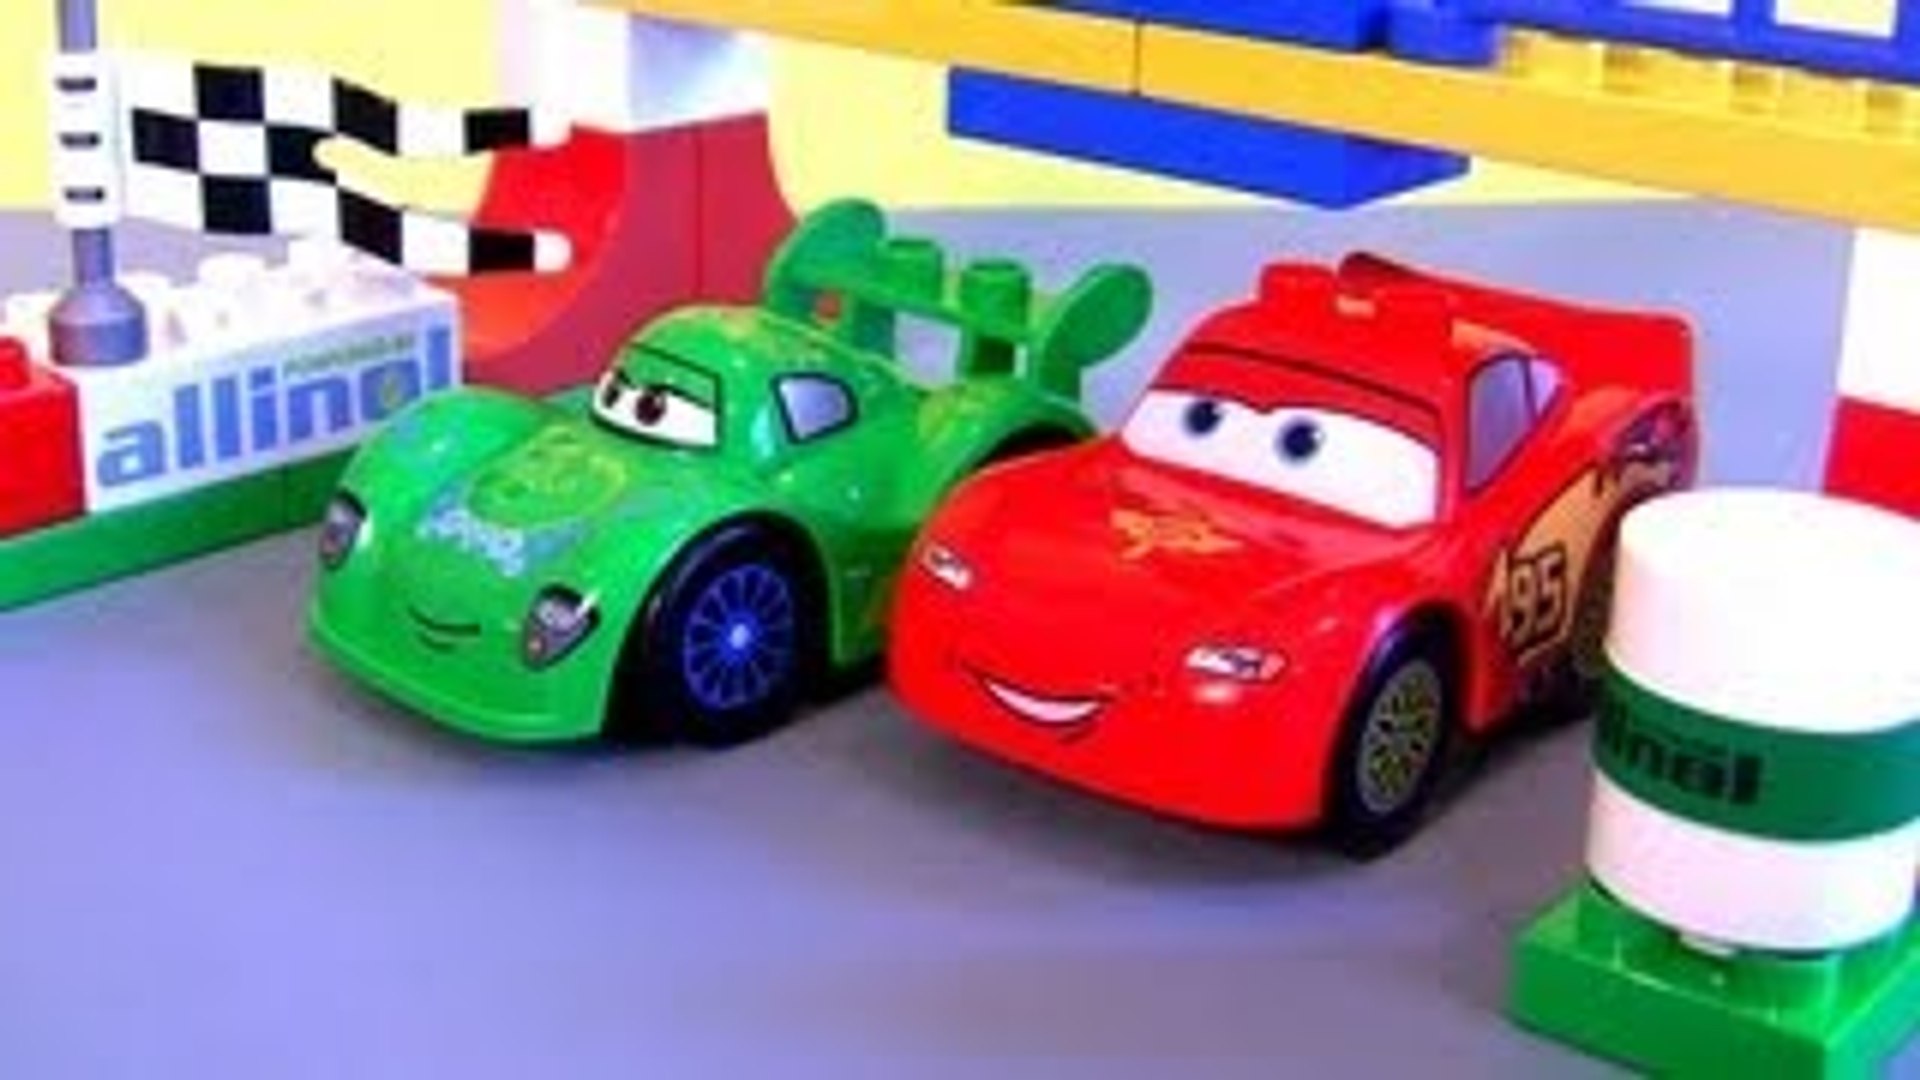 Lego Duplo Carla Veloso Lightning McQueen Cars2 Tokyo Racing Disney Pixar  Buildable Toys 5 - Dailymotion Video